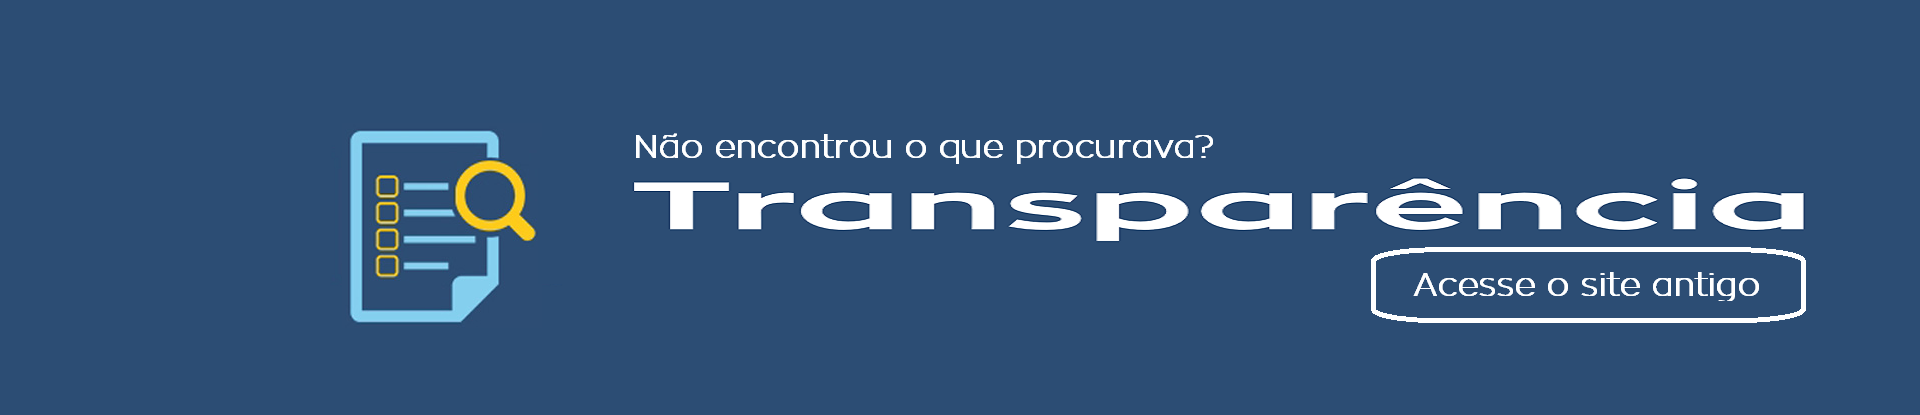 portal_transparencia_copia